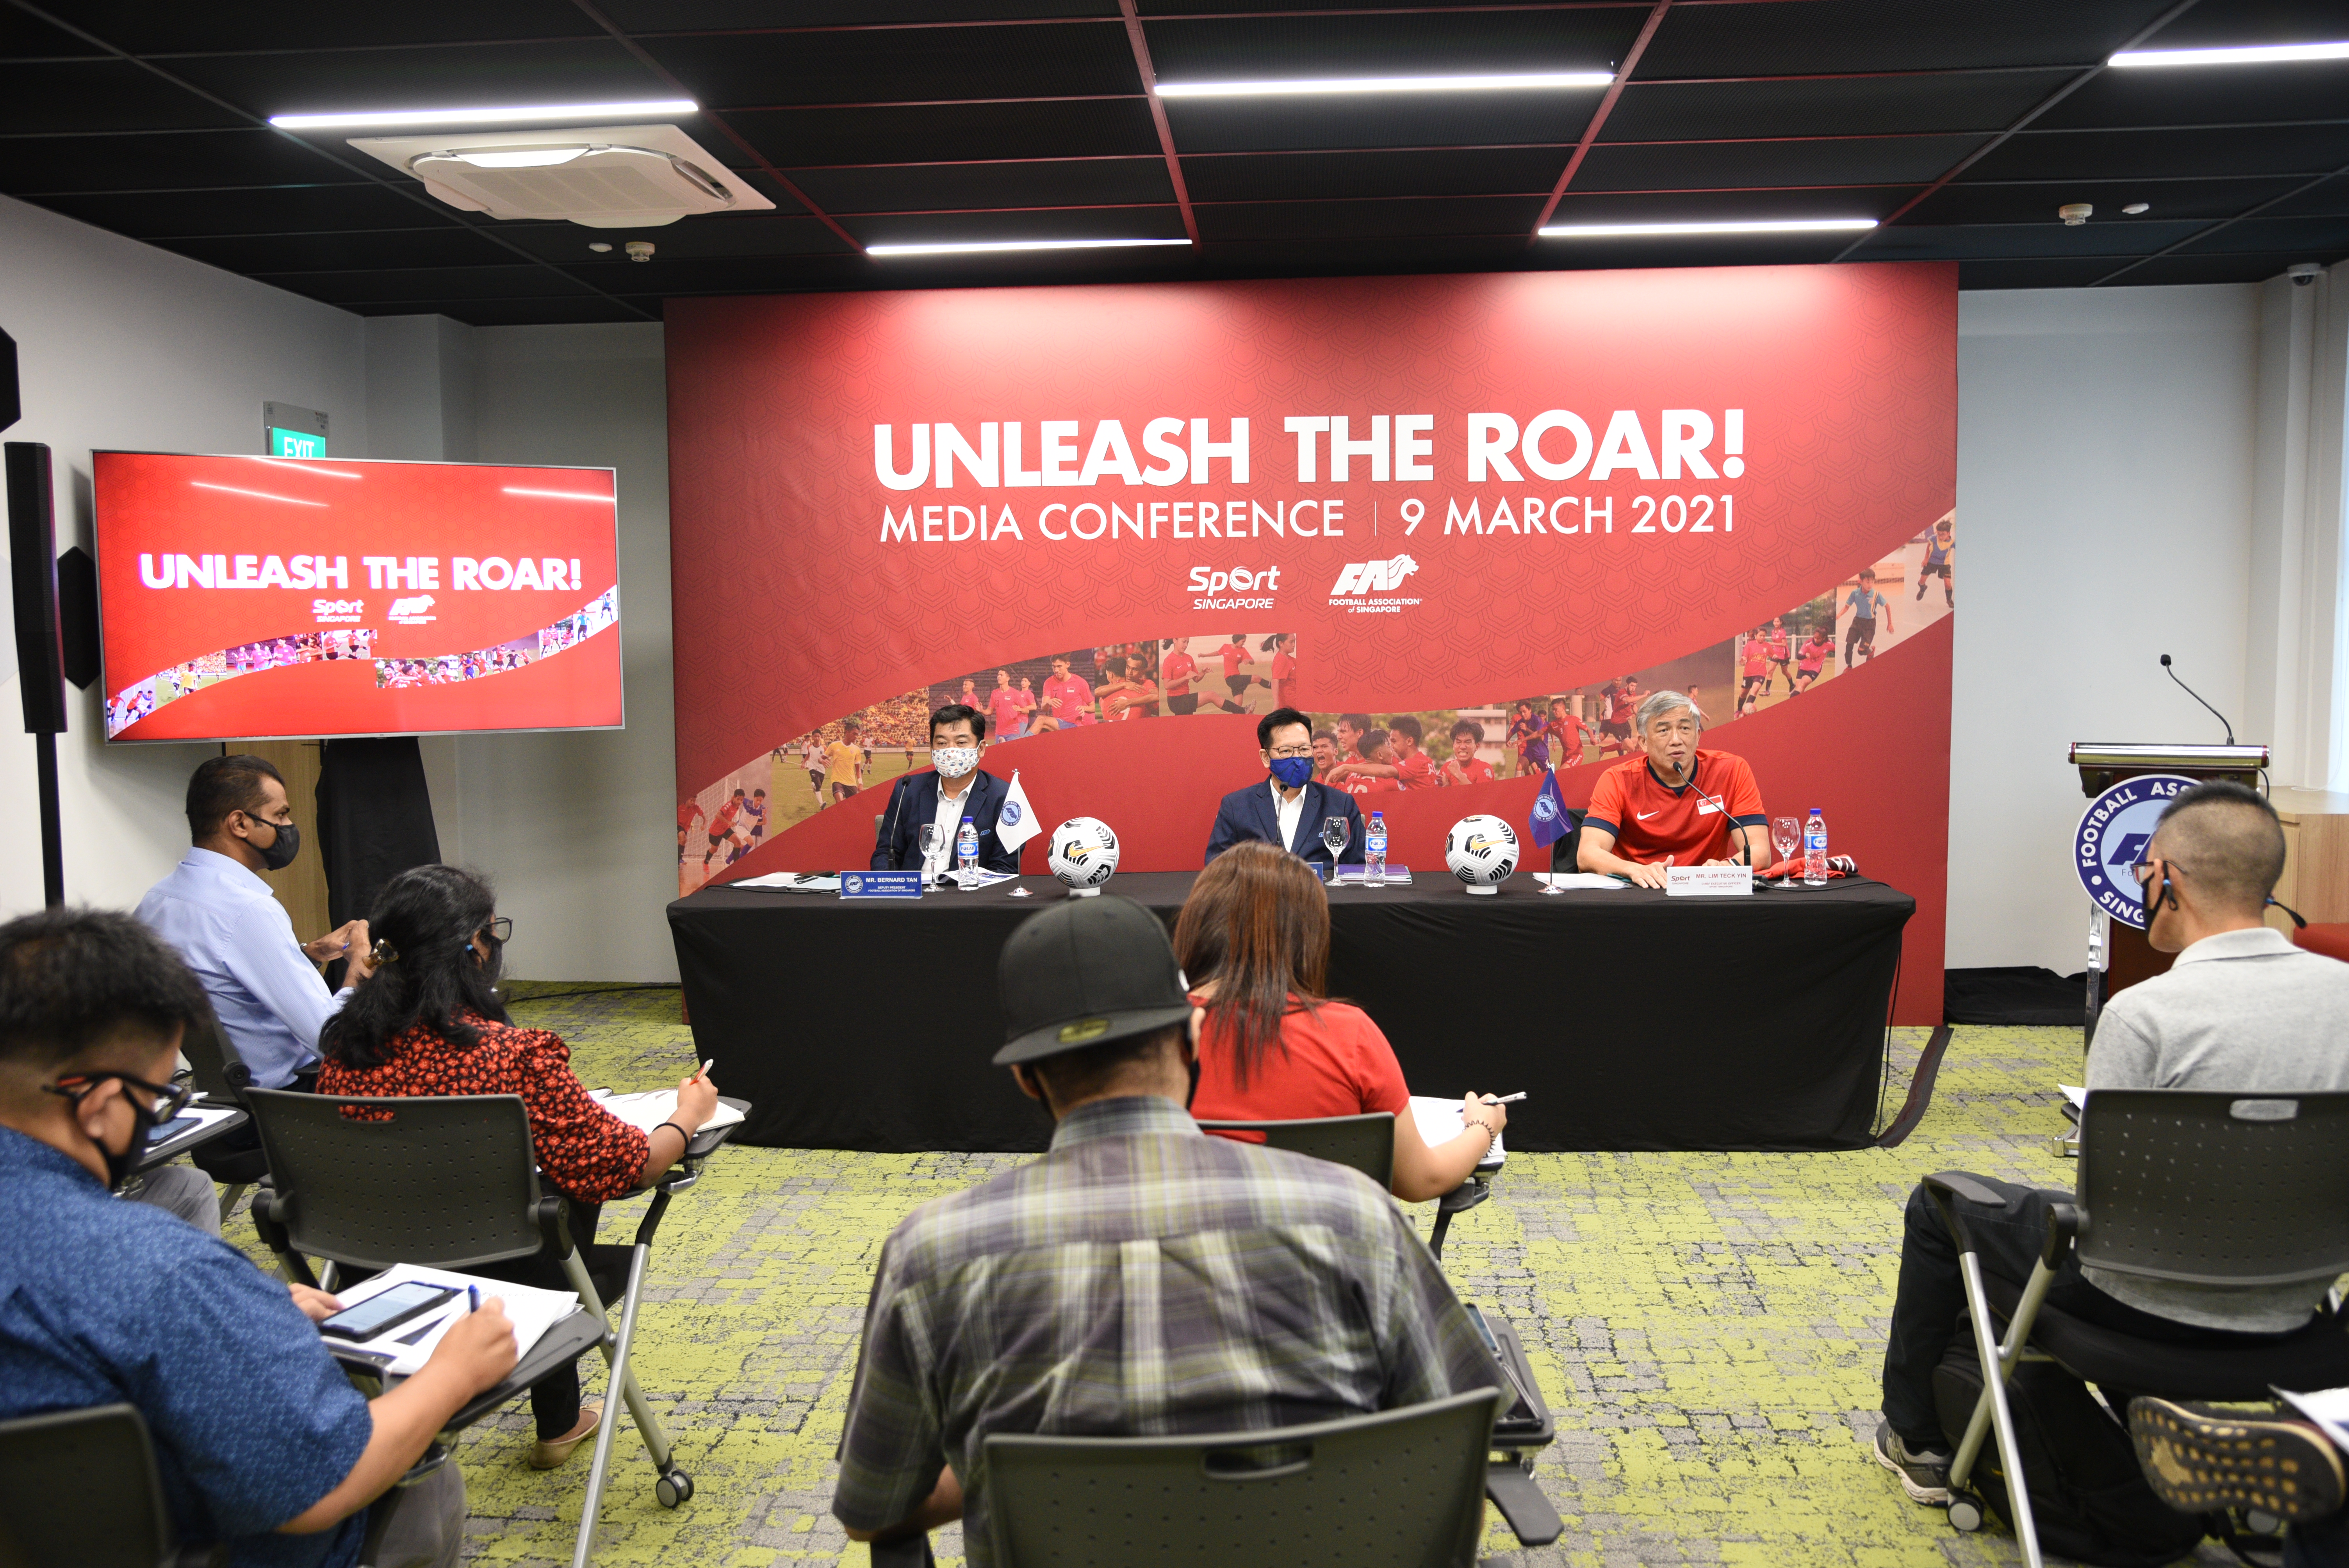 UNLEASH THE ROAR! An aspiration to unify Singaporeans through football